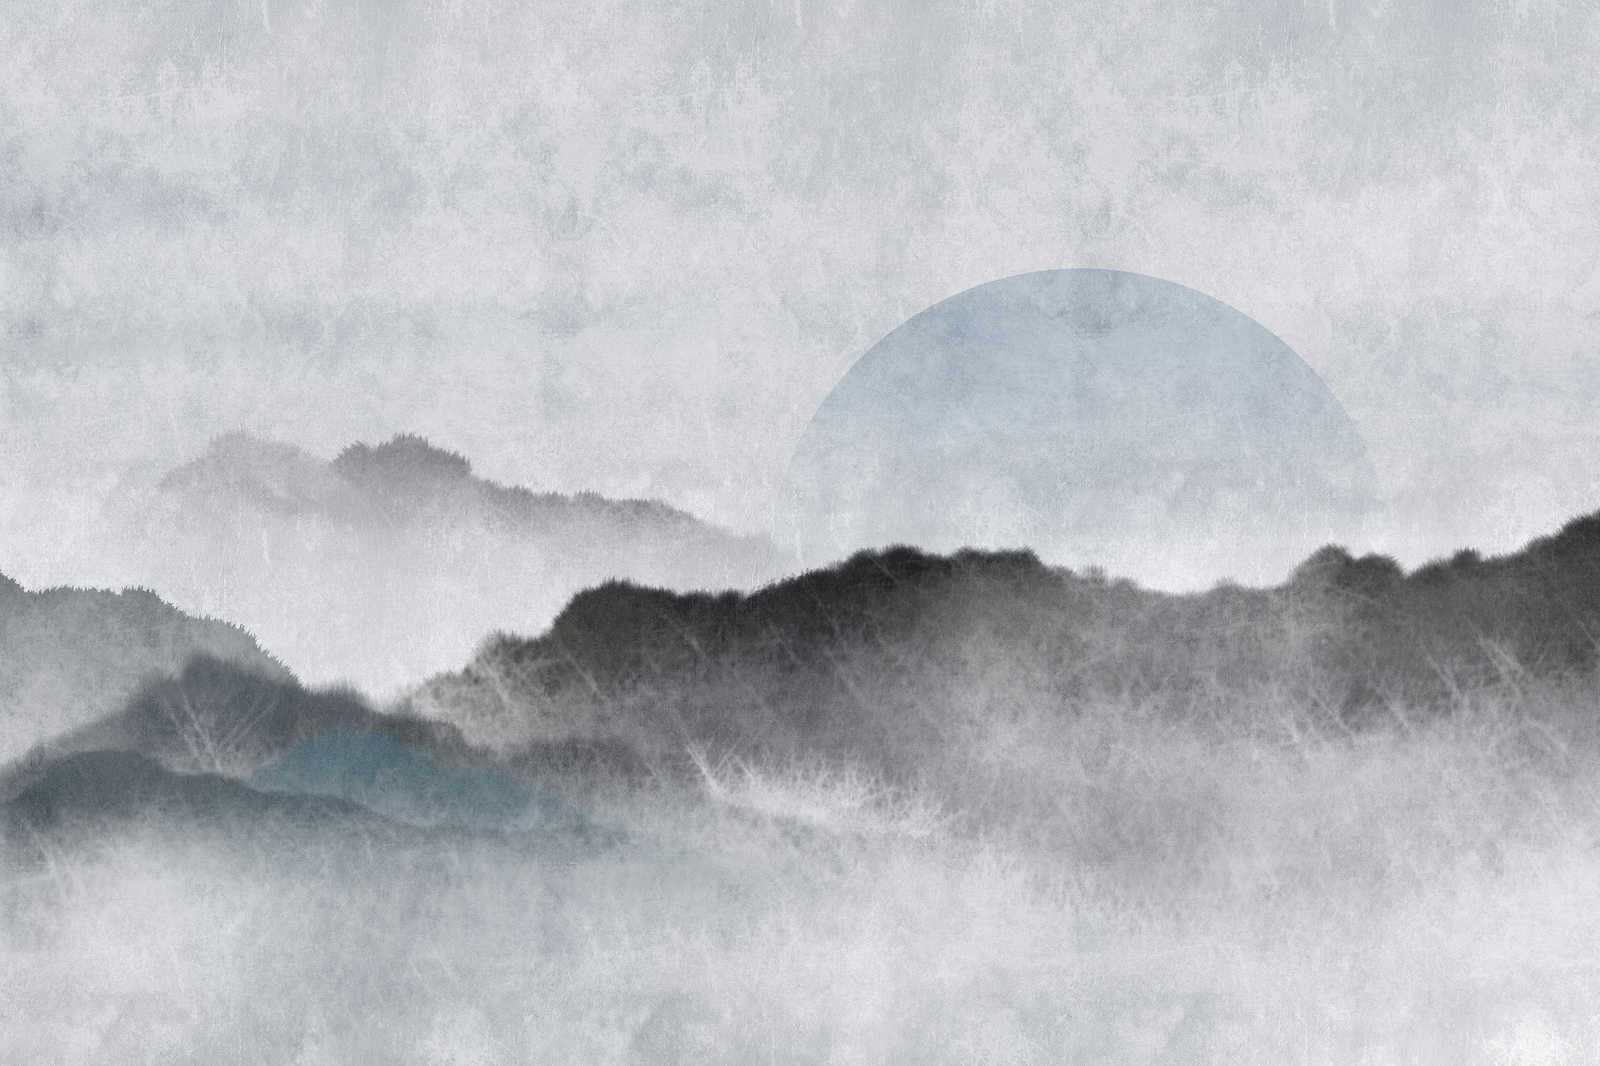             Akaishi 2 - Leinwandbild Asiatische Kunst Berglandschaft, Grau & Weiß – 1,20 m x 0,80 m
        